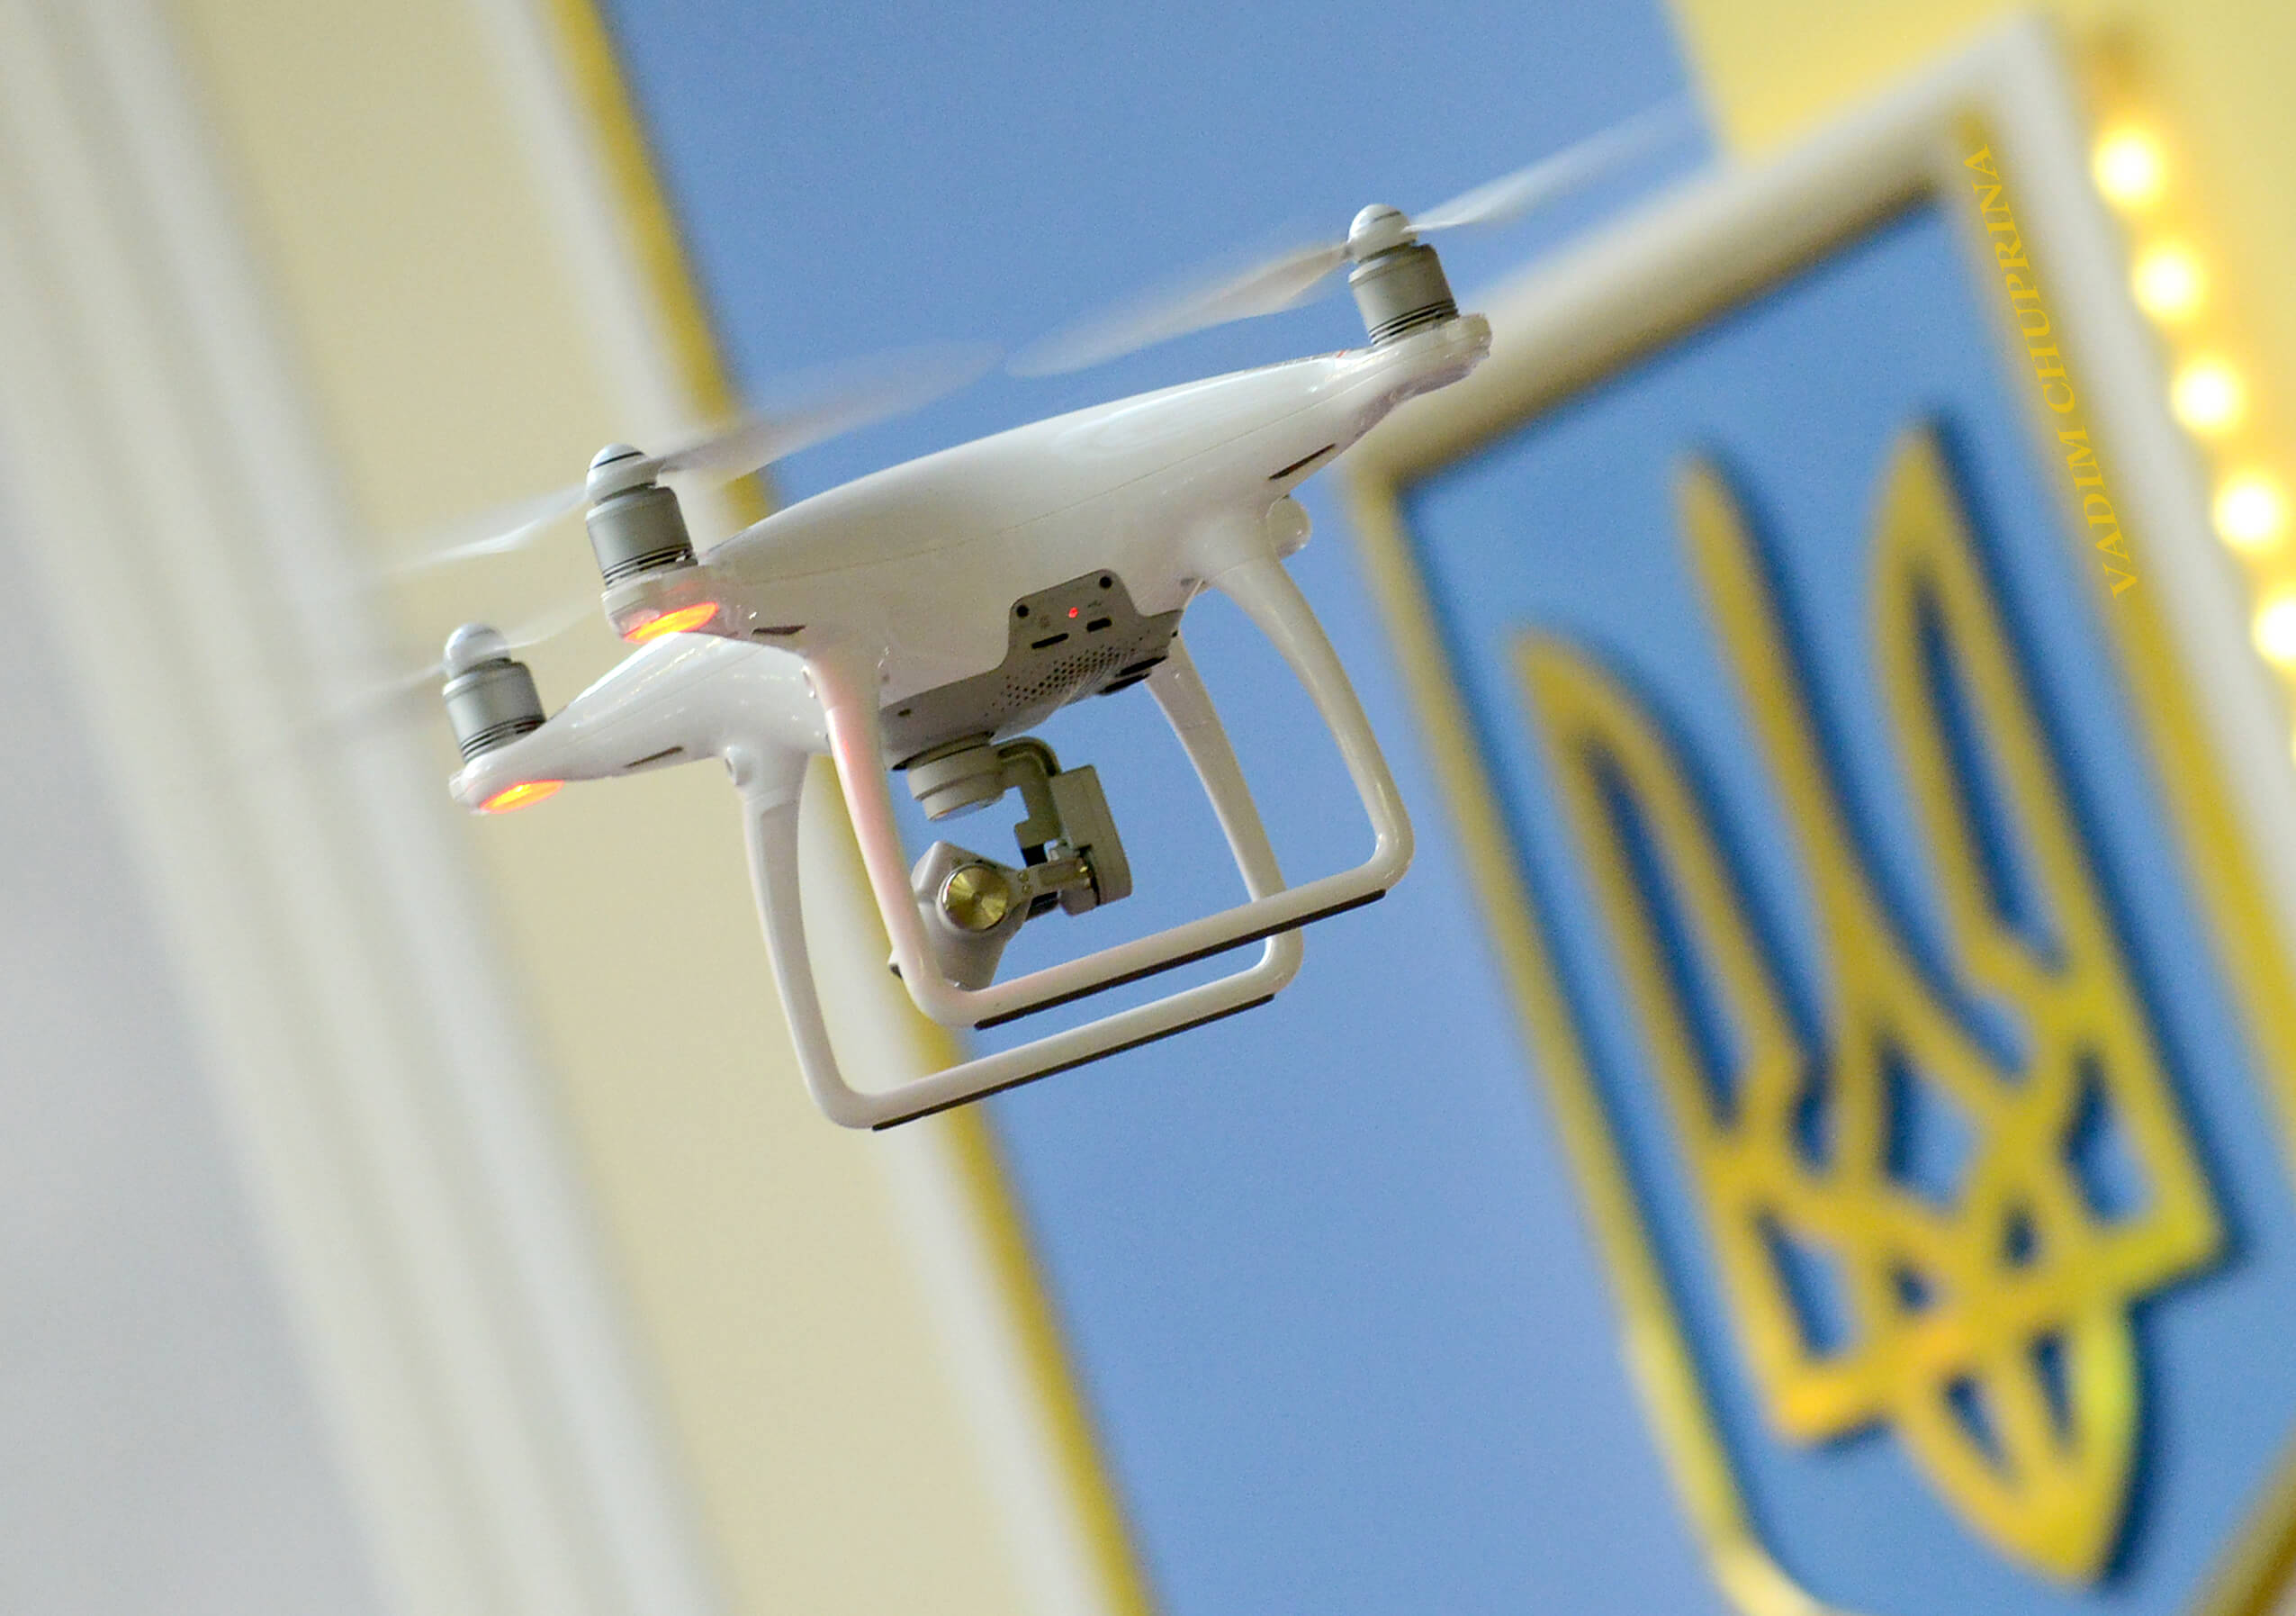 Ukrainian Drones 